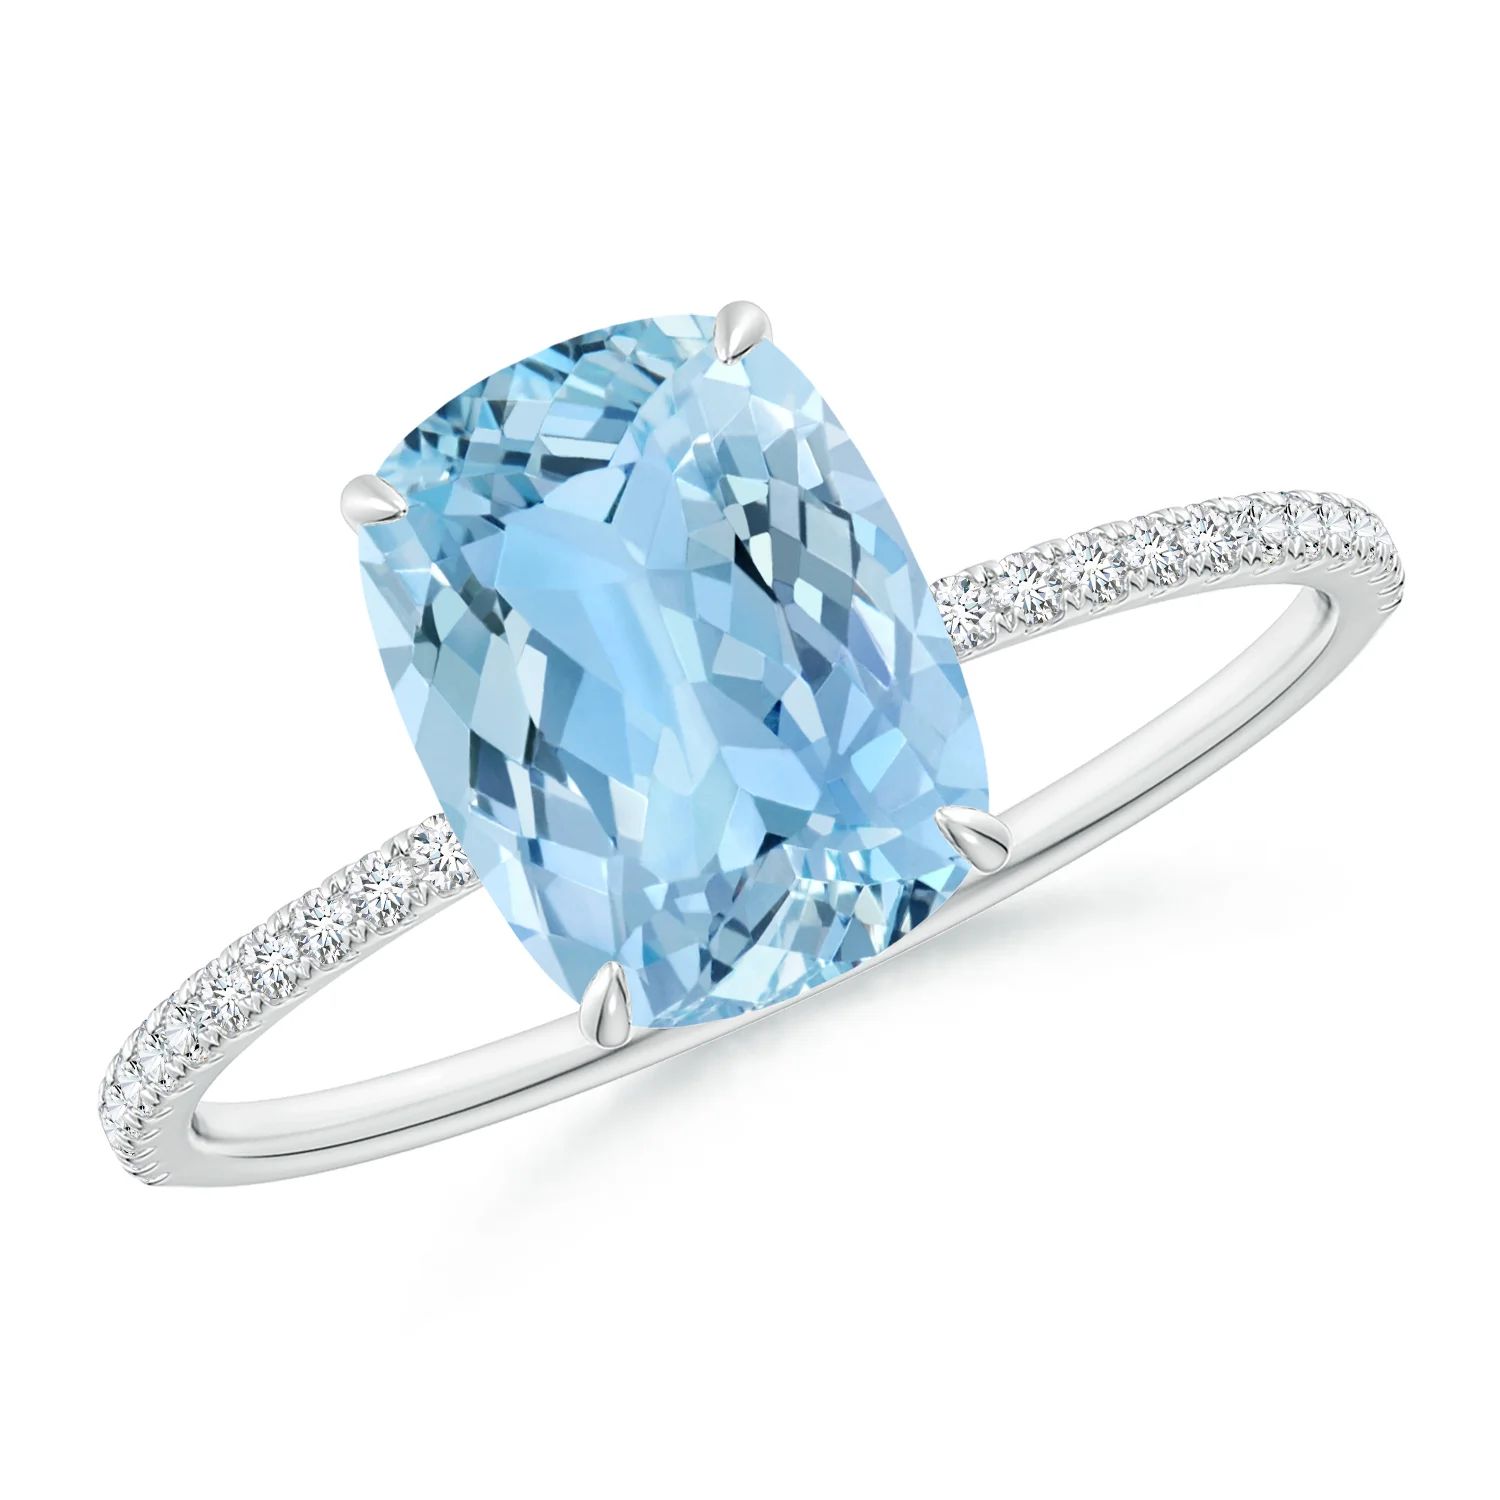 Thin Shank Cushion Cut Aquamarine Ring With Diamond Accents | Angara | Angara US